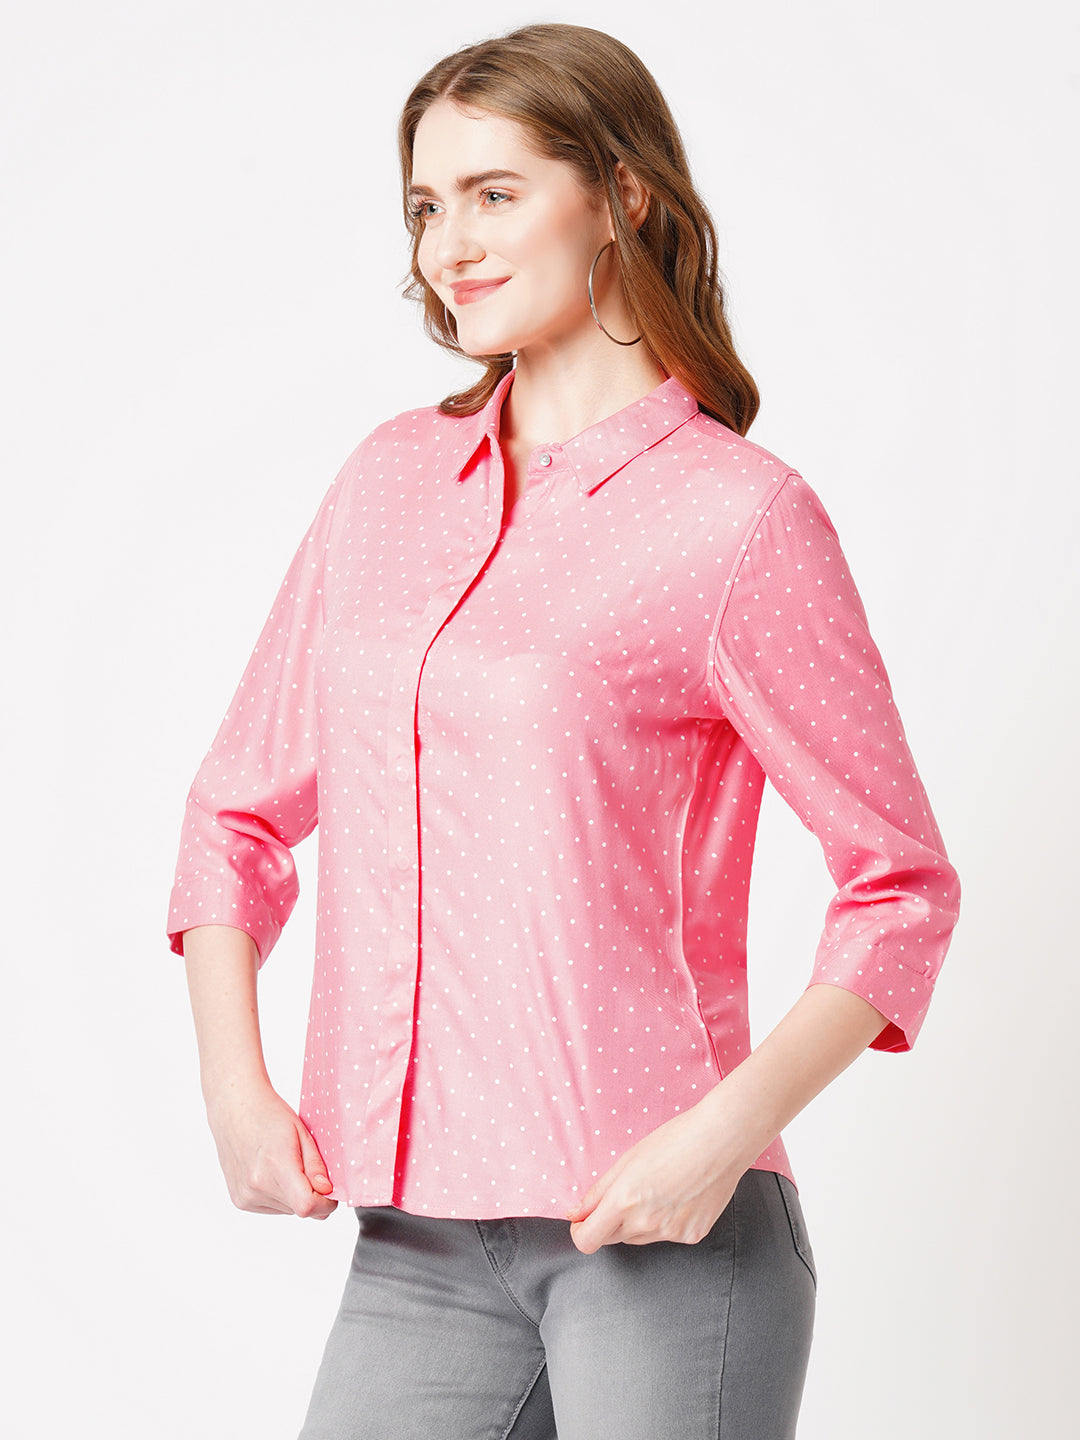 Women Polka Dot Printed Casual Shirt